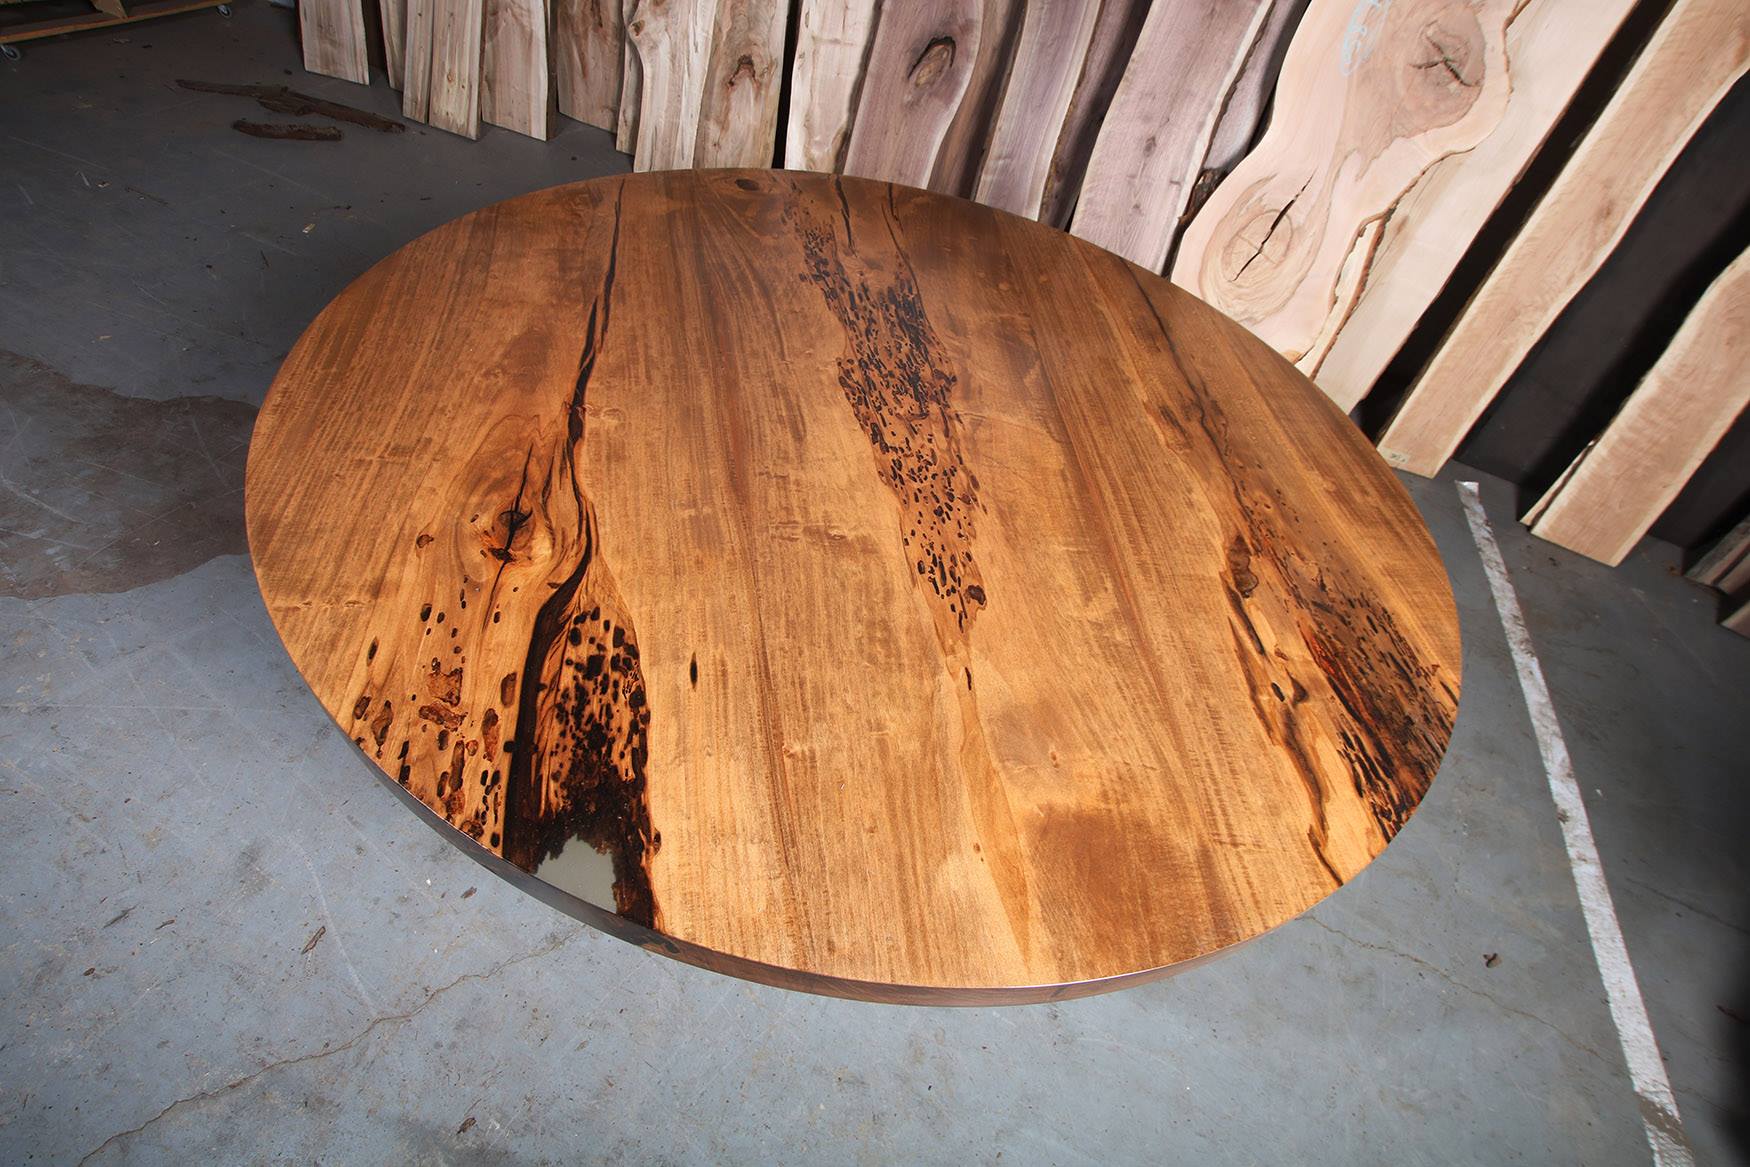 Round Maple Kitchen Table